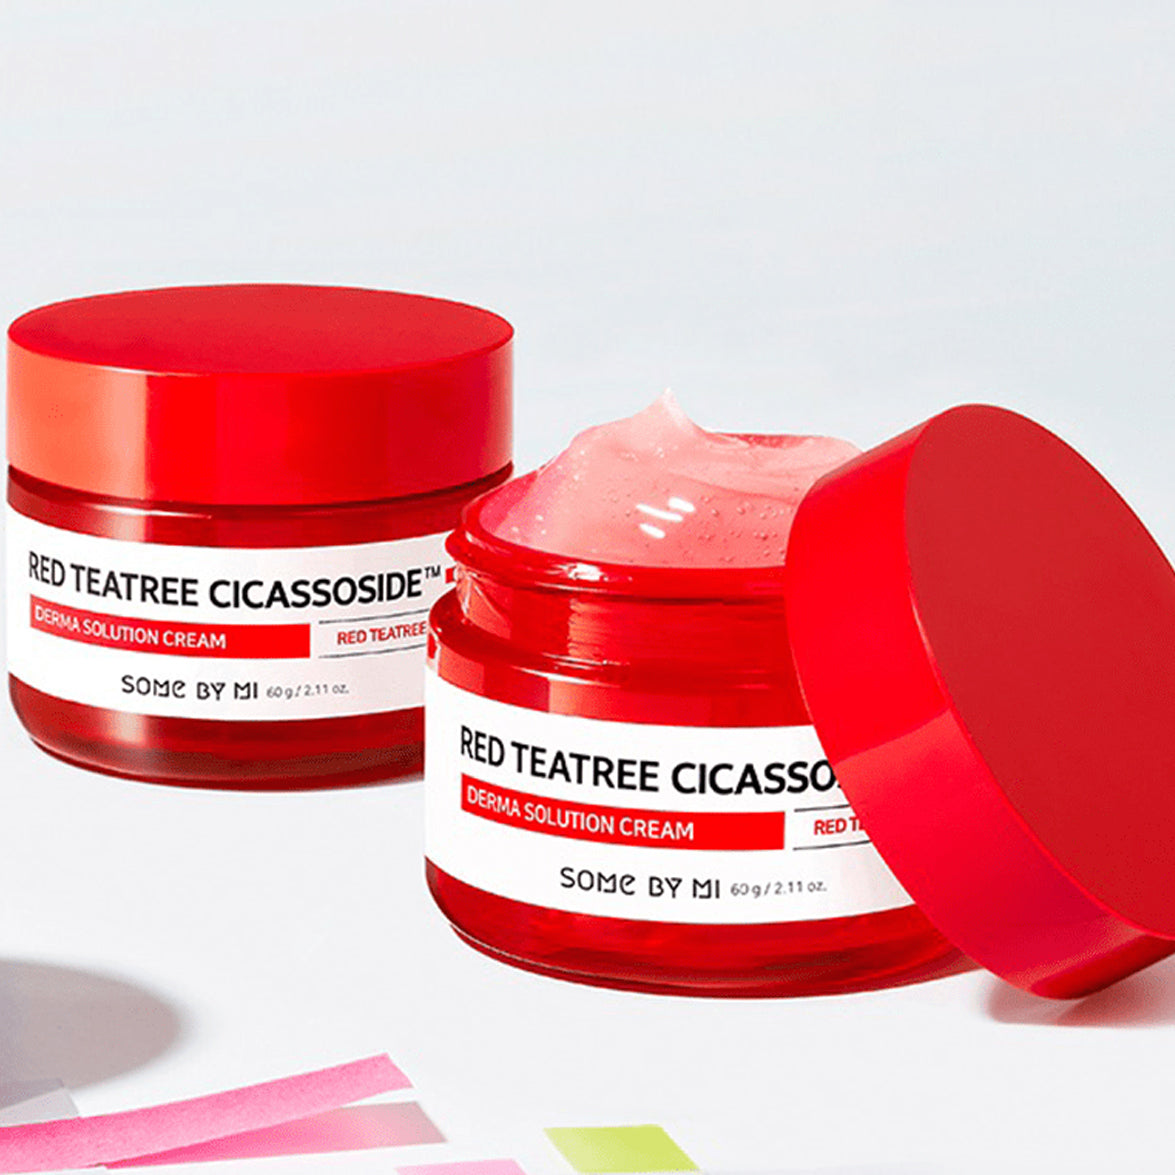 Red Teatree Cicassoside Derma Solution Cream 60g